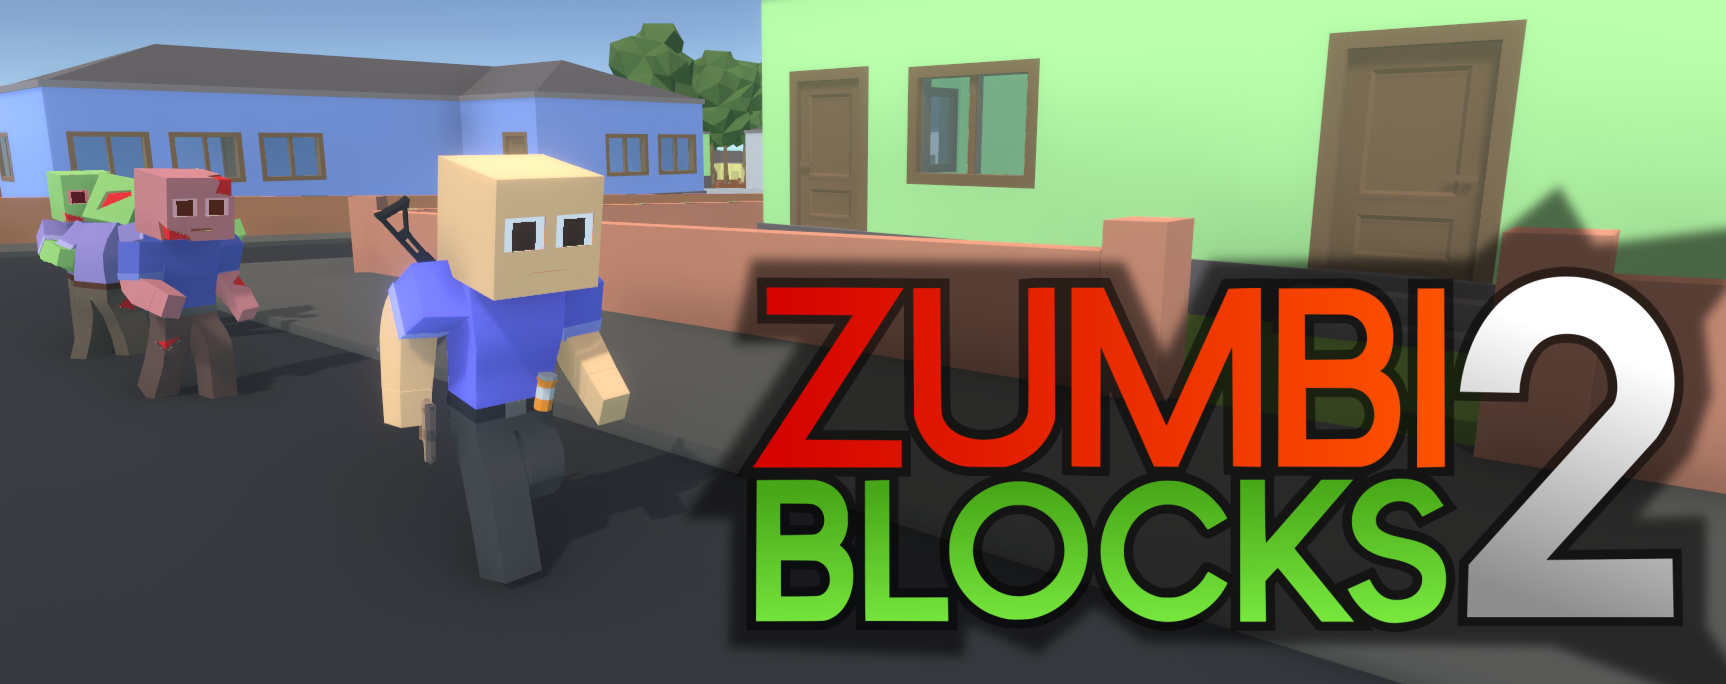 Zumbi Blocks 2 by Adrianks47